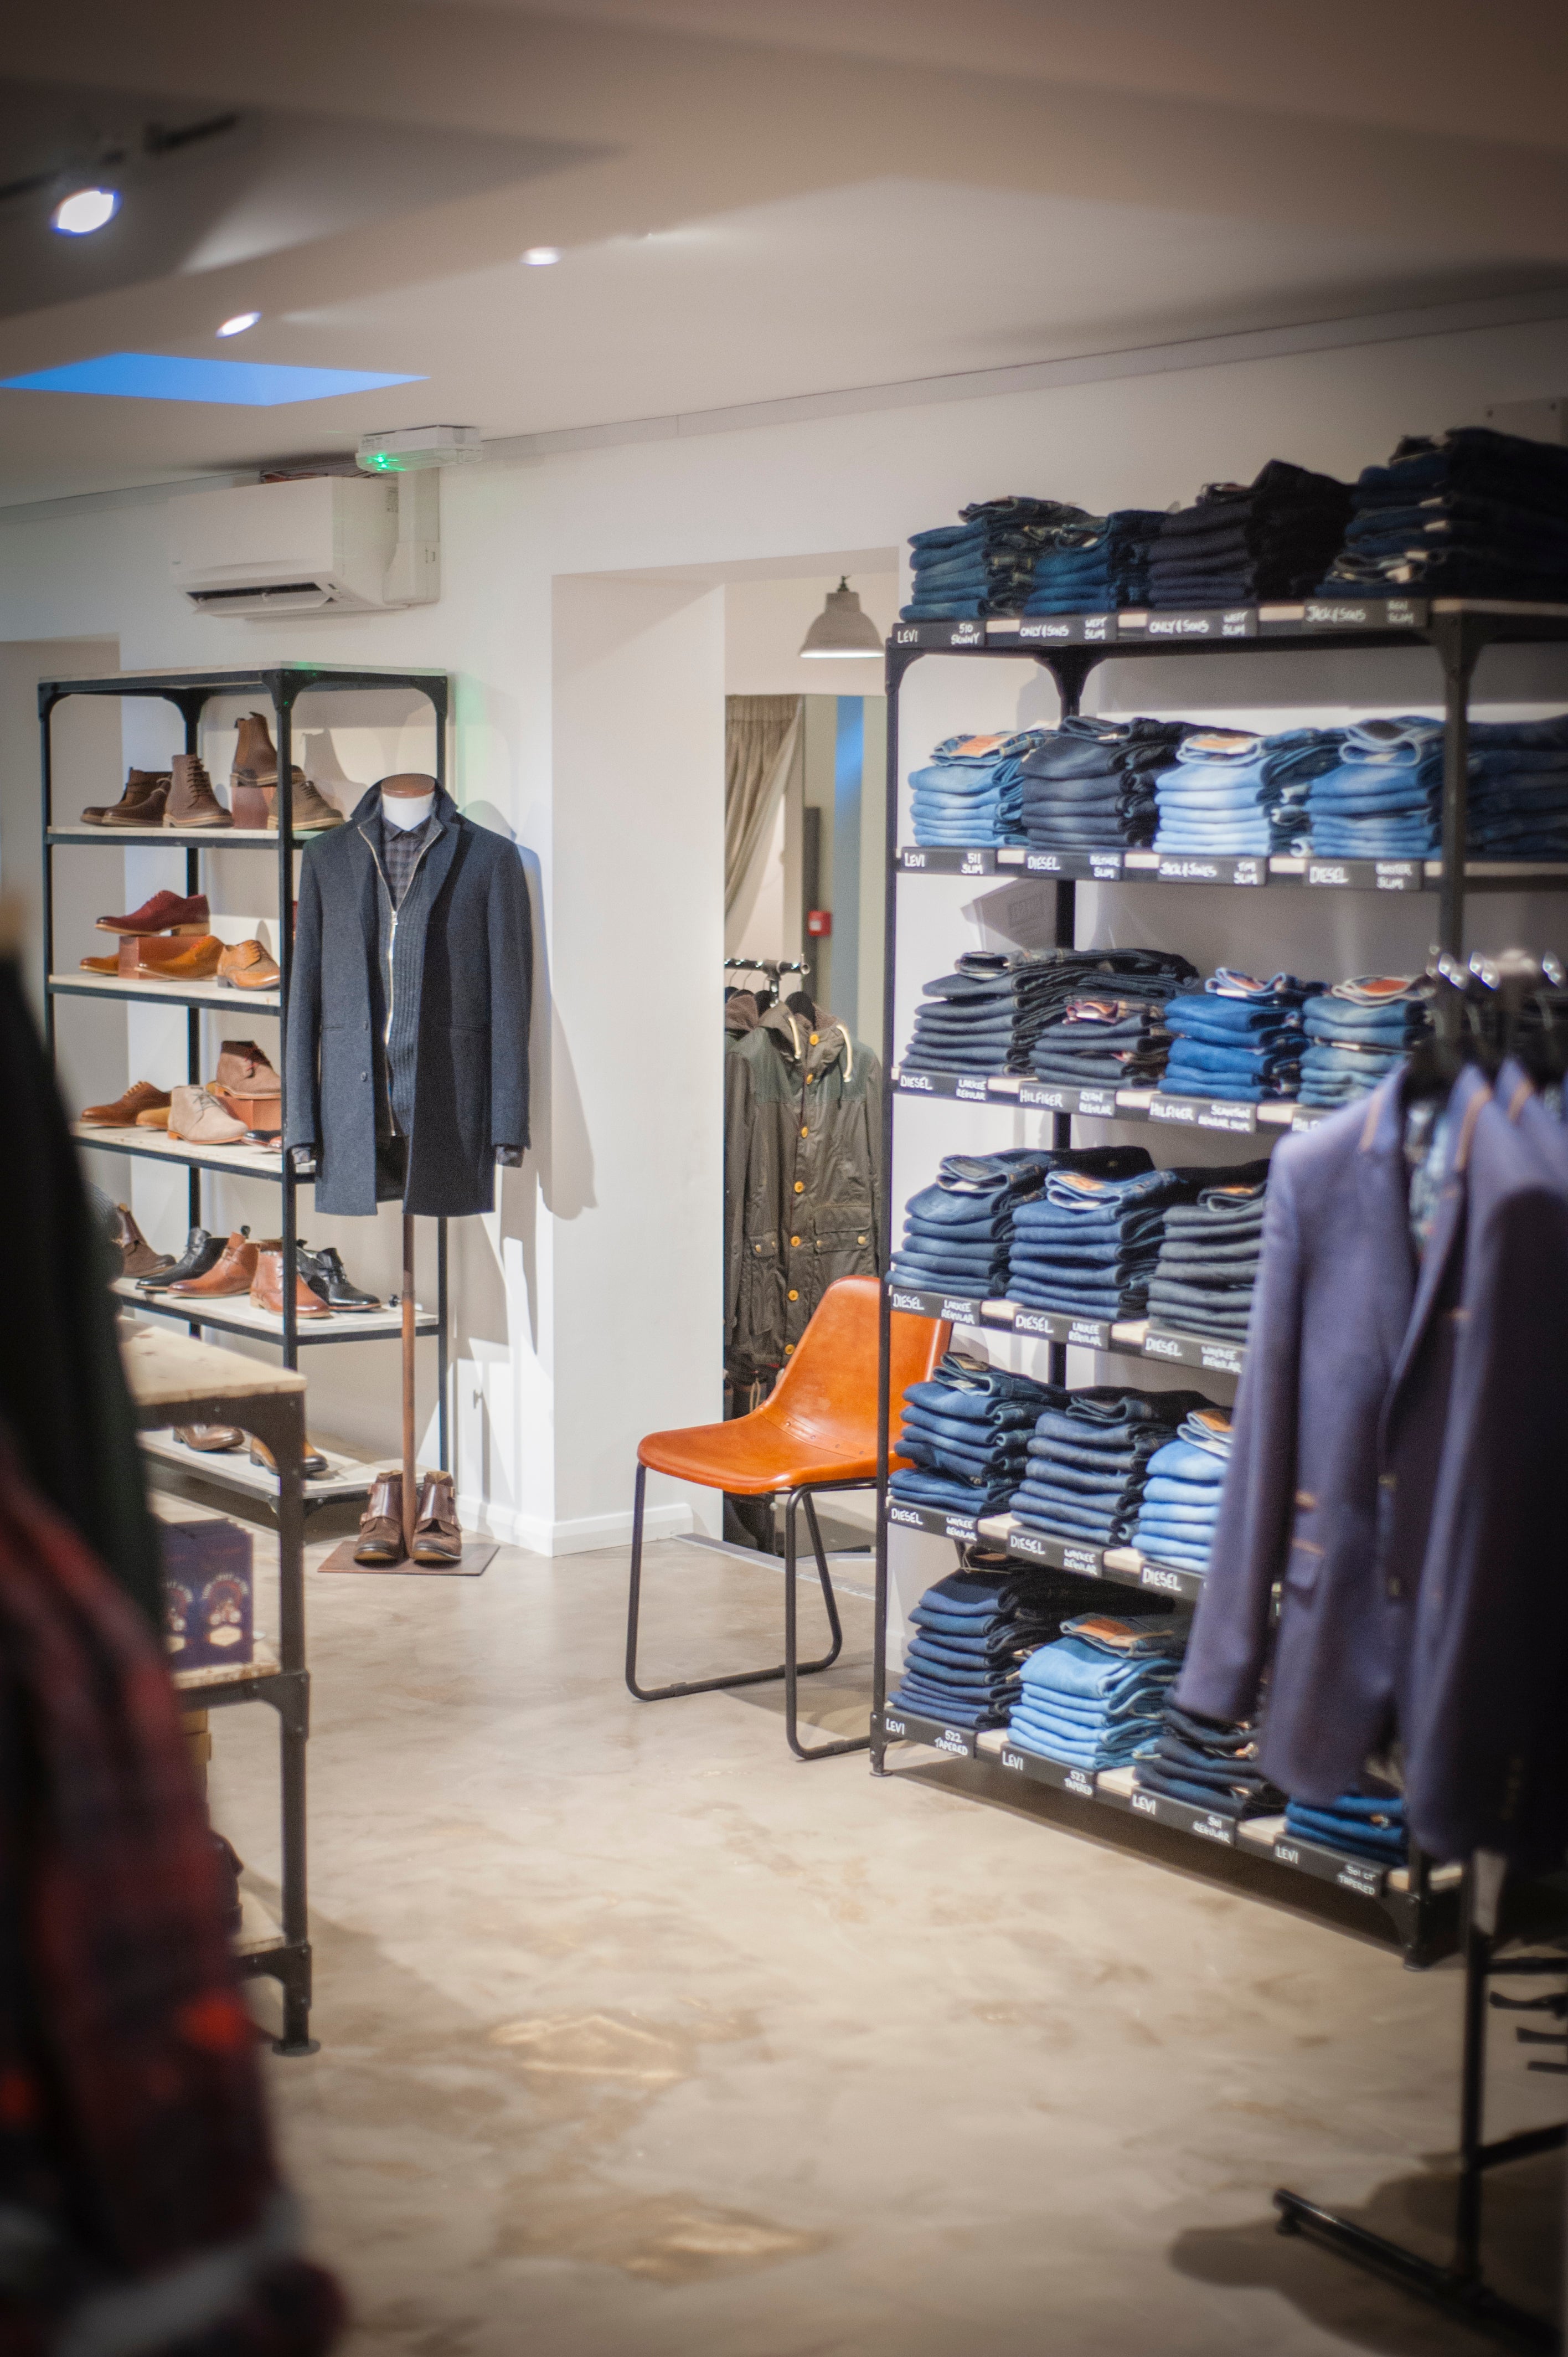 Customer space, menswear, retail interior design, jeans display